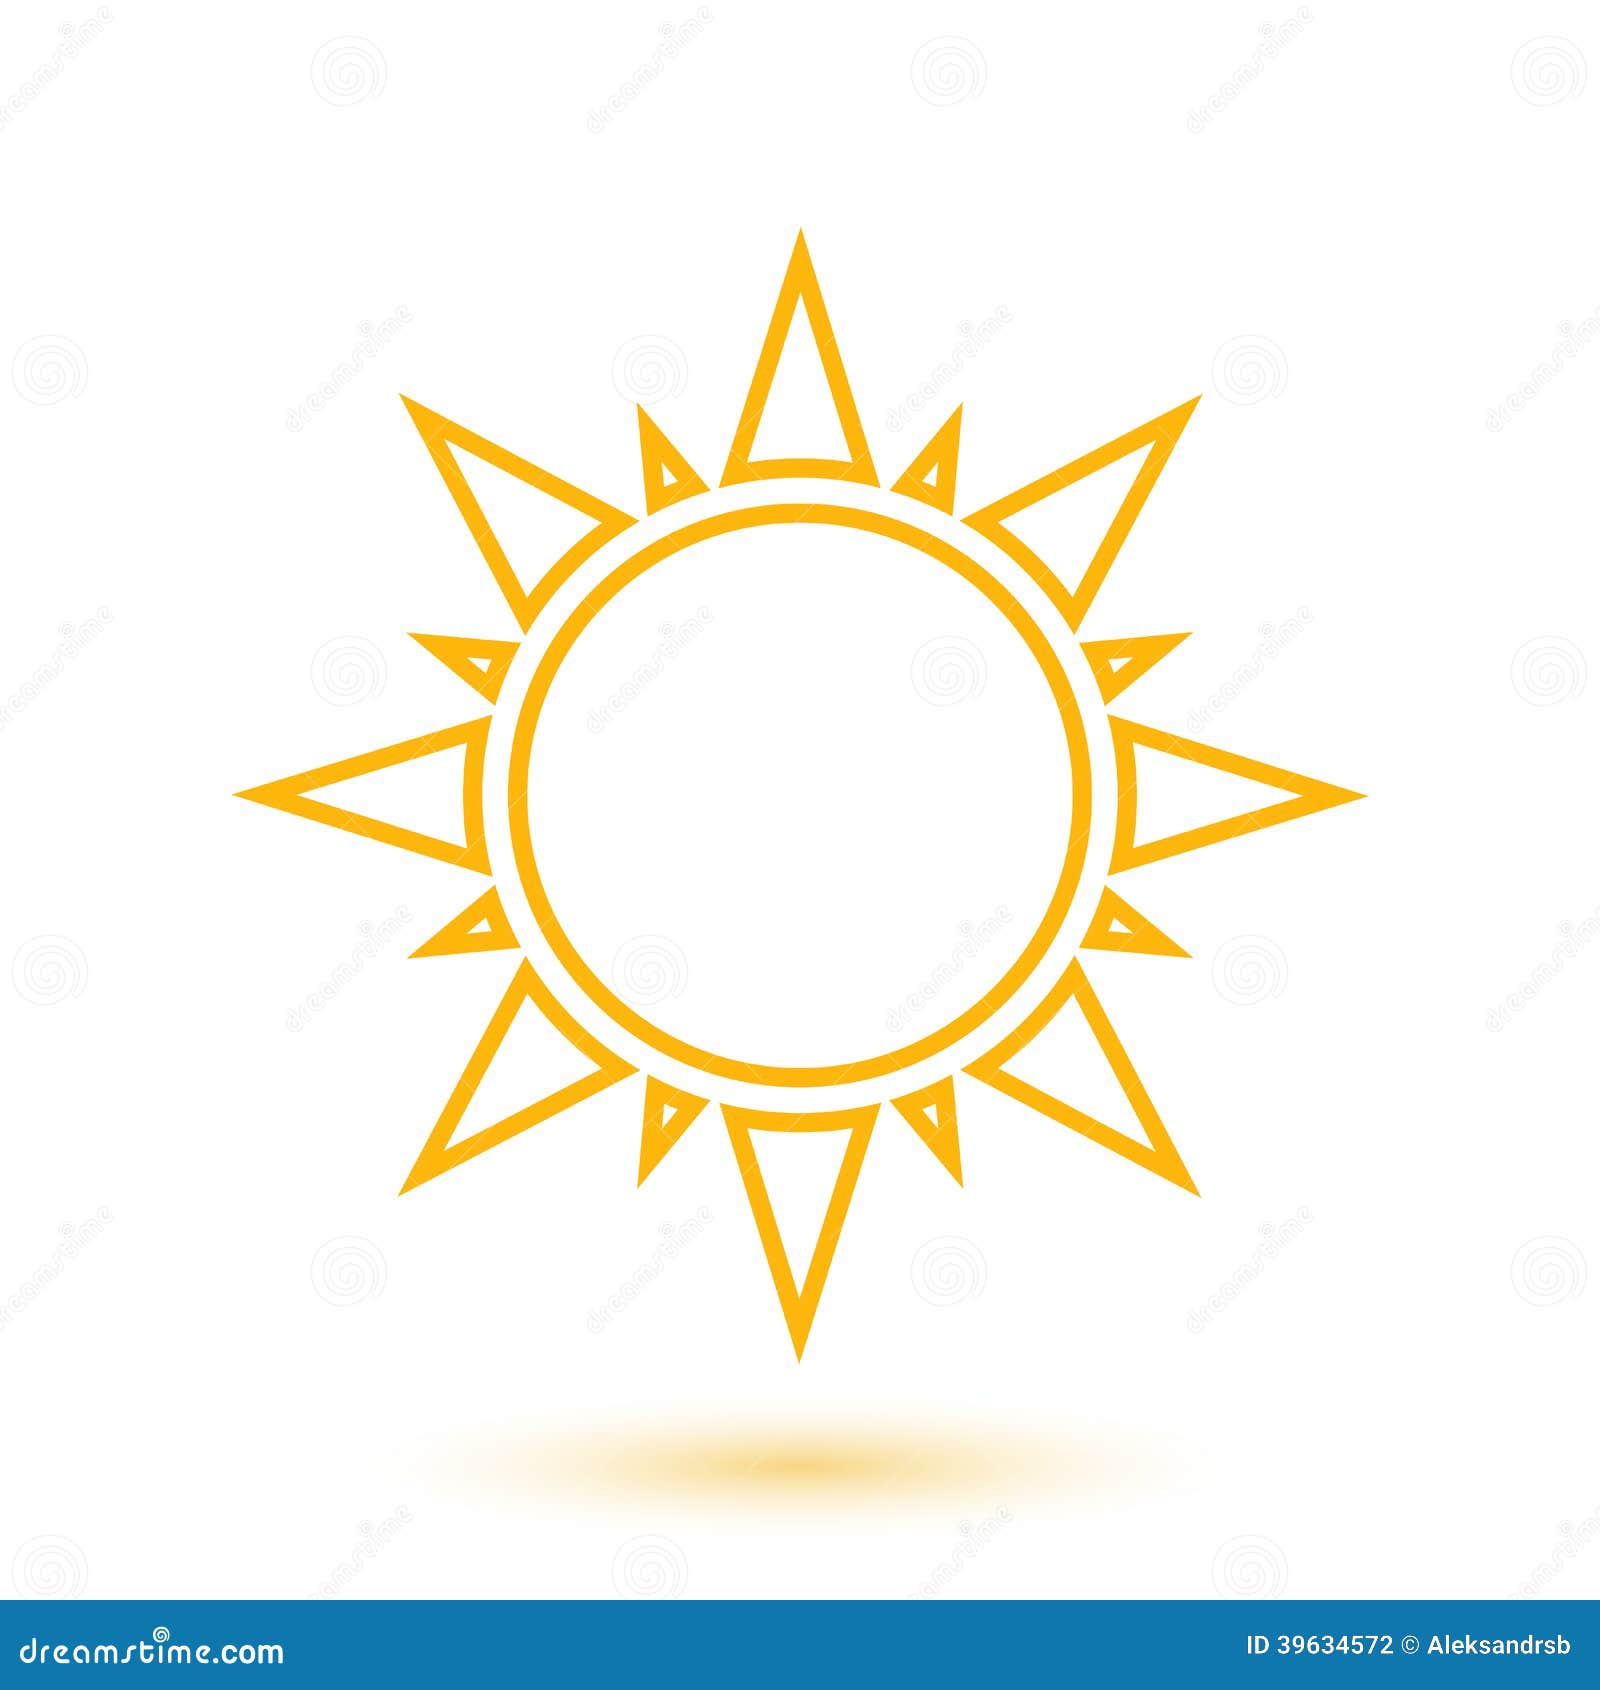  Simple  Illustration Of Abstract Sun  Stock Vector 